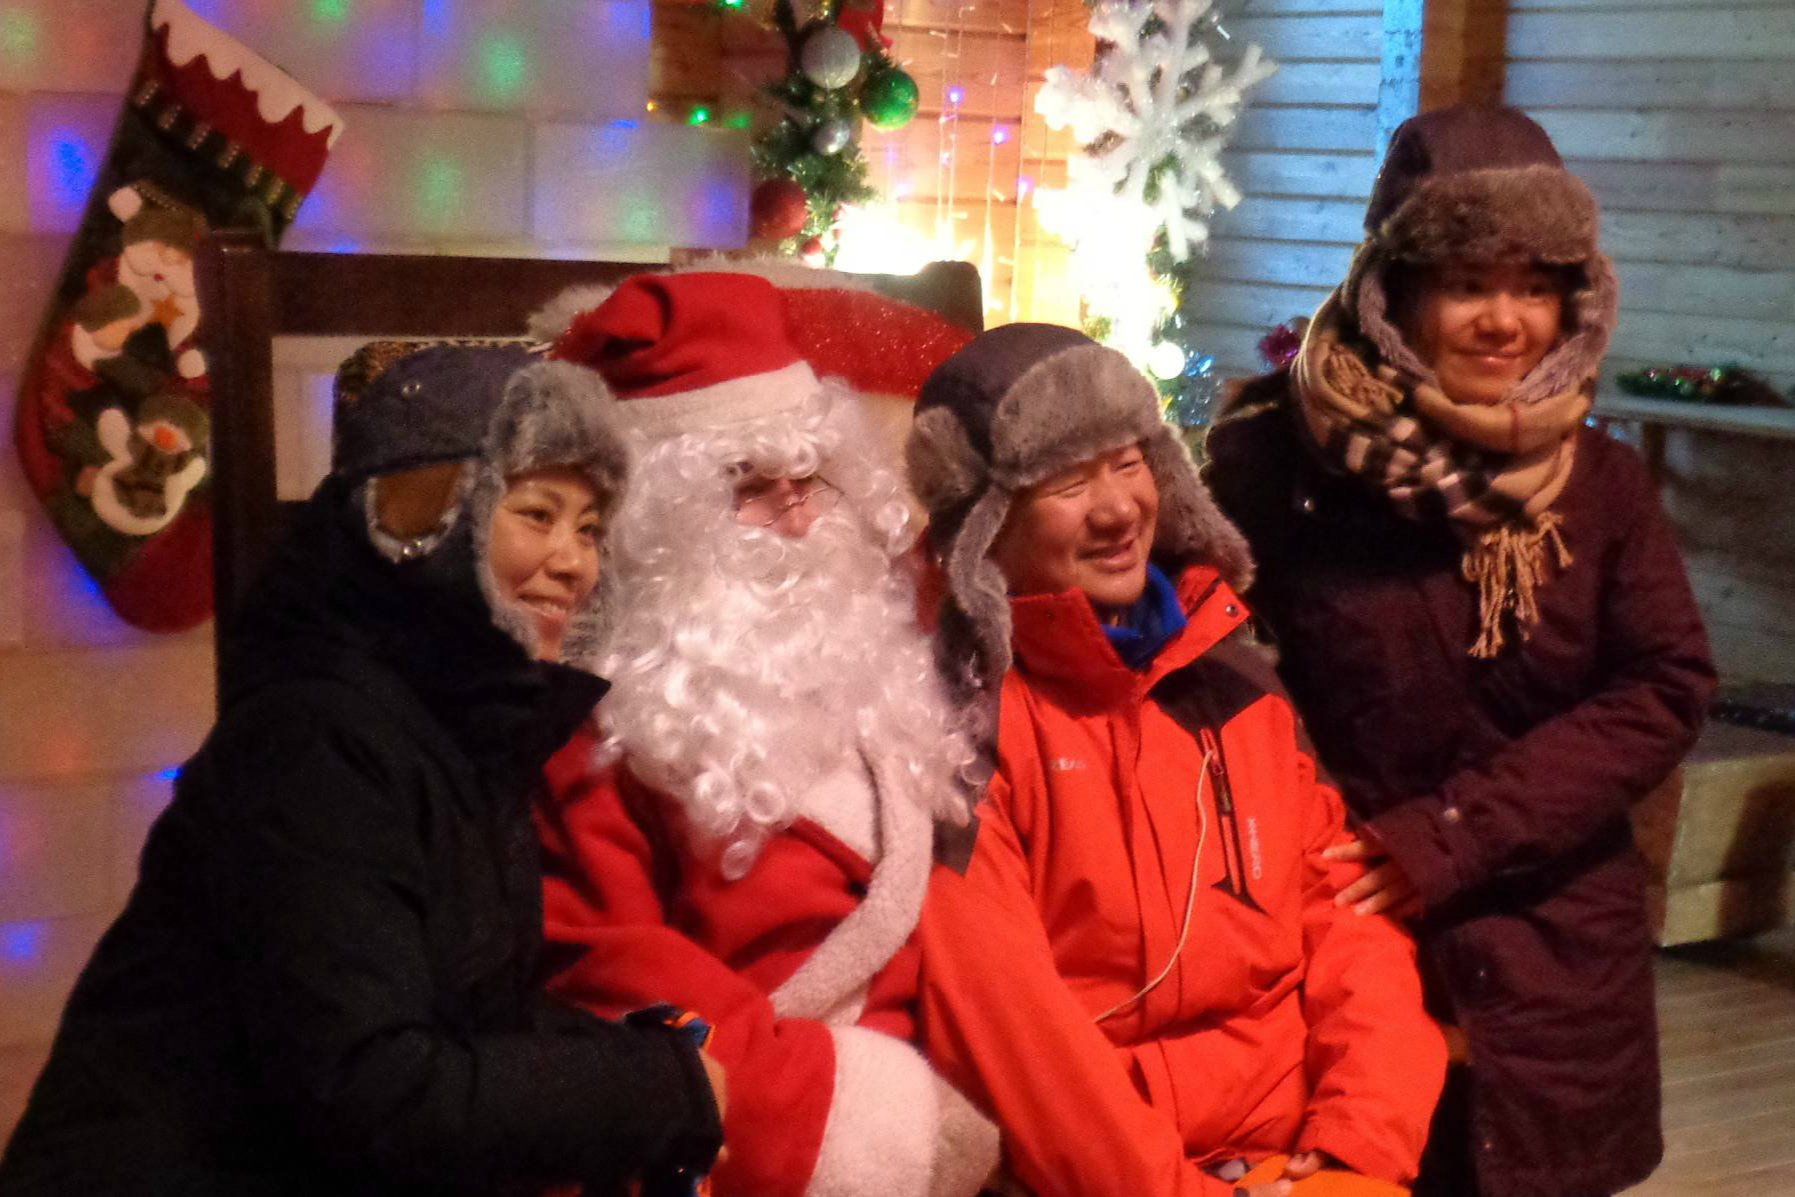 The 8th Finnish Santa Claus Sture